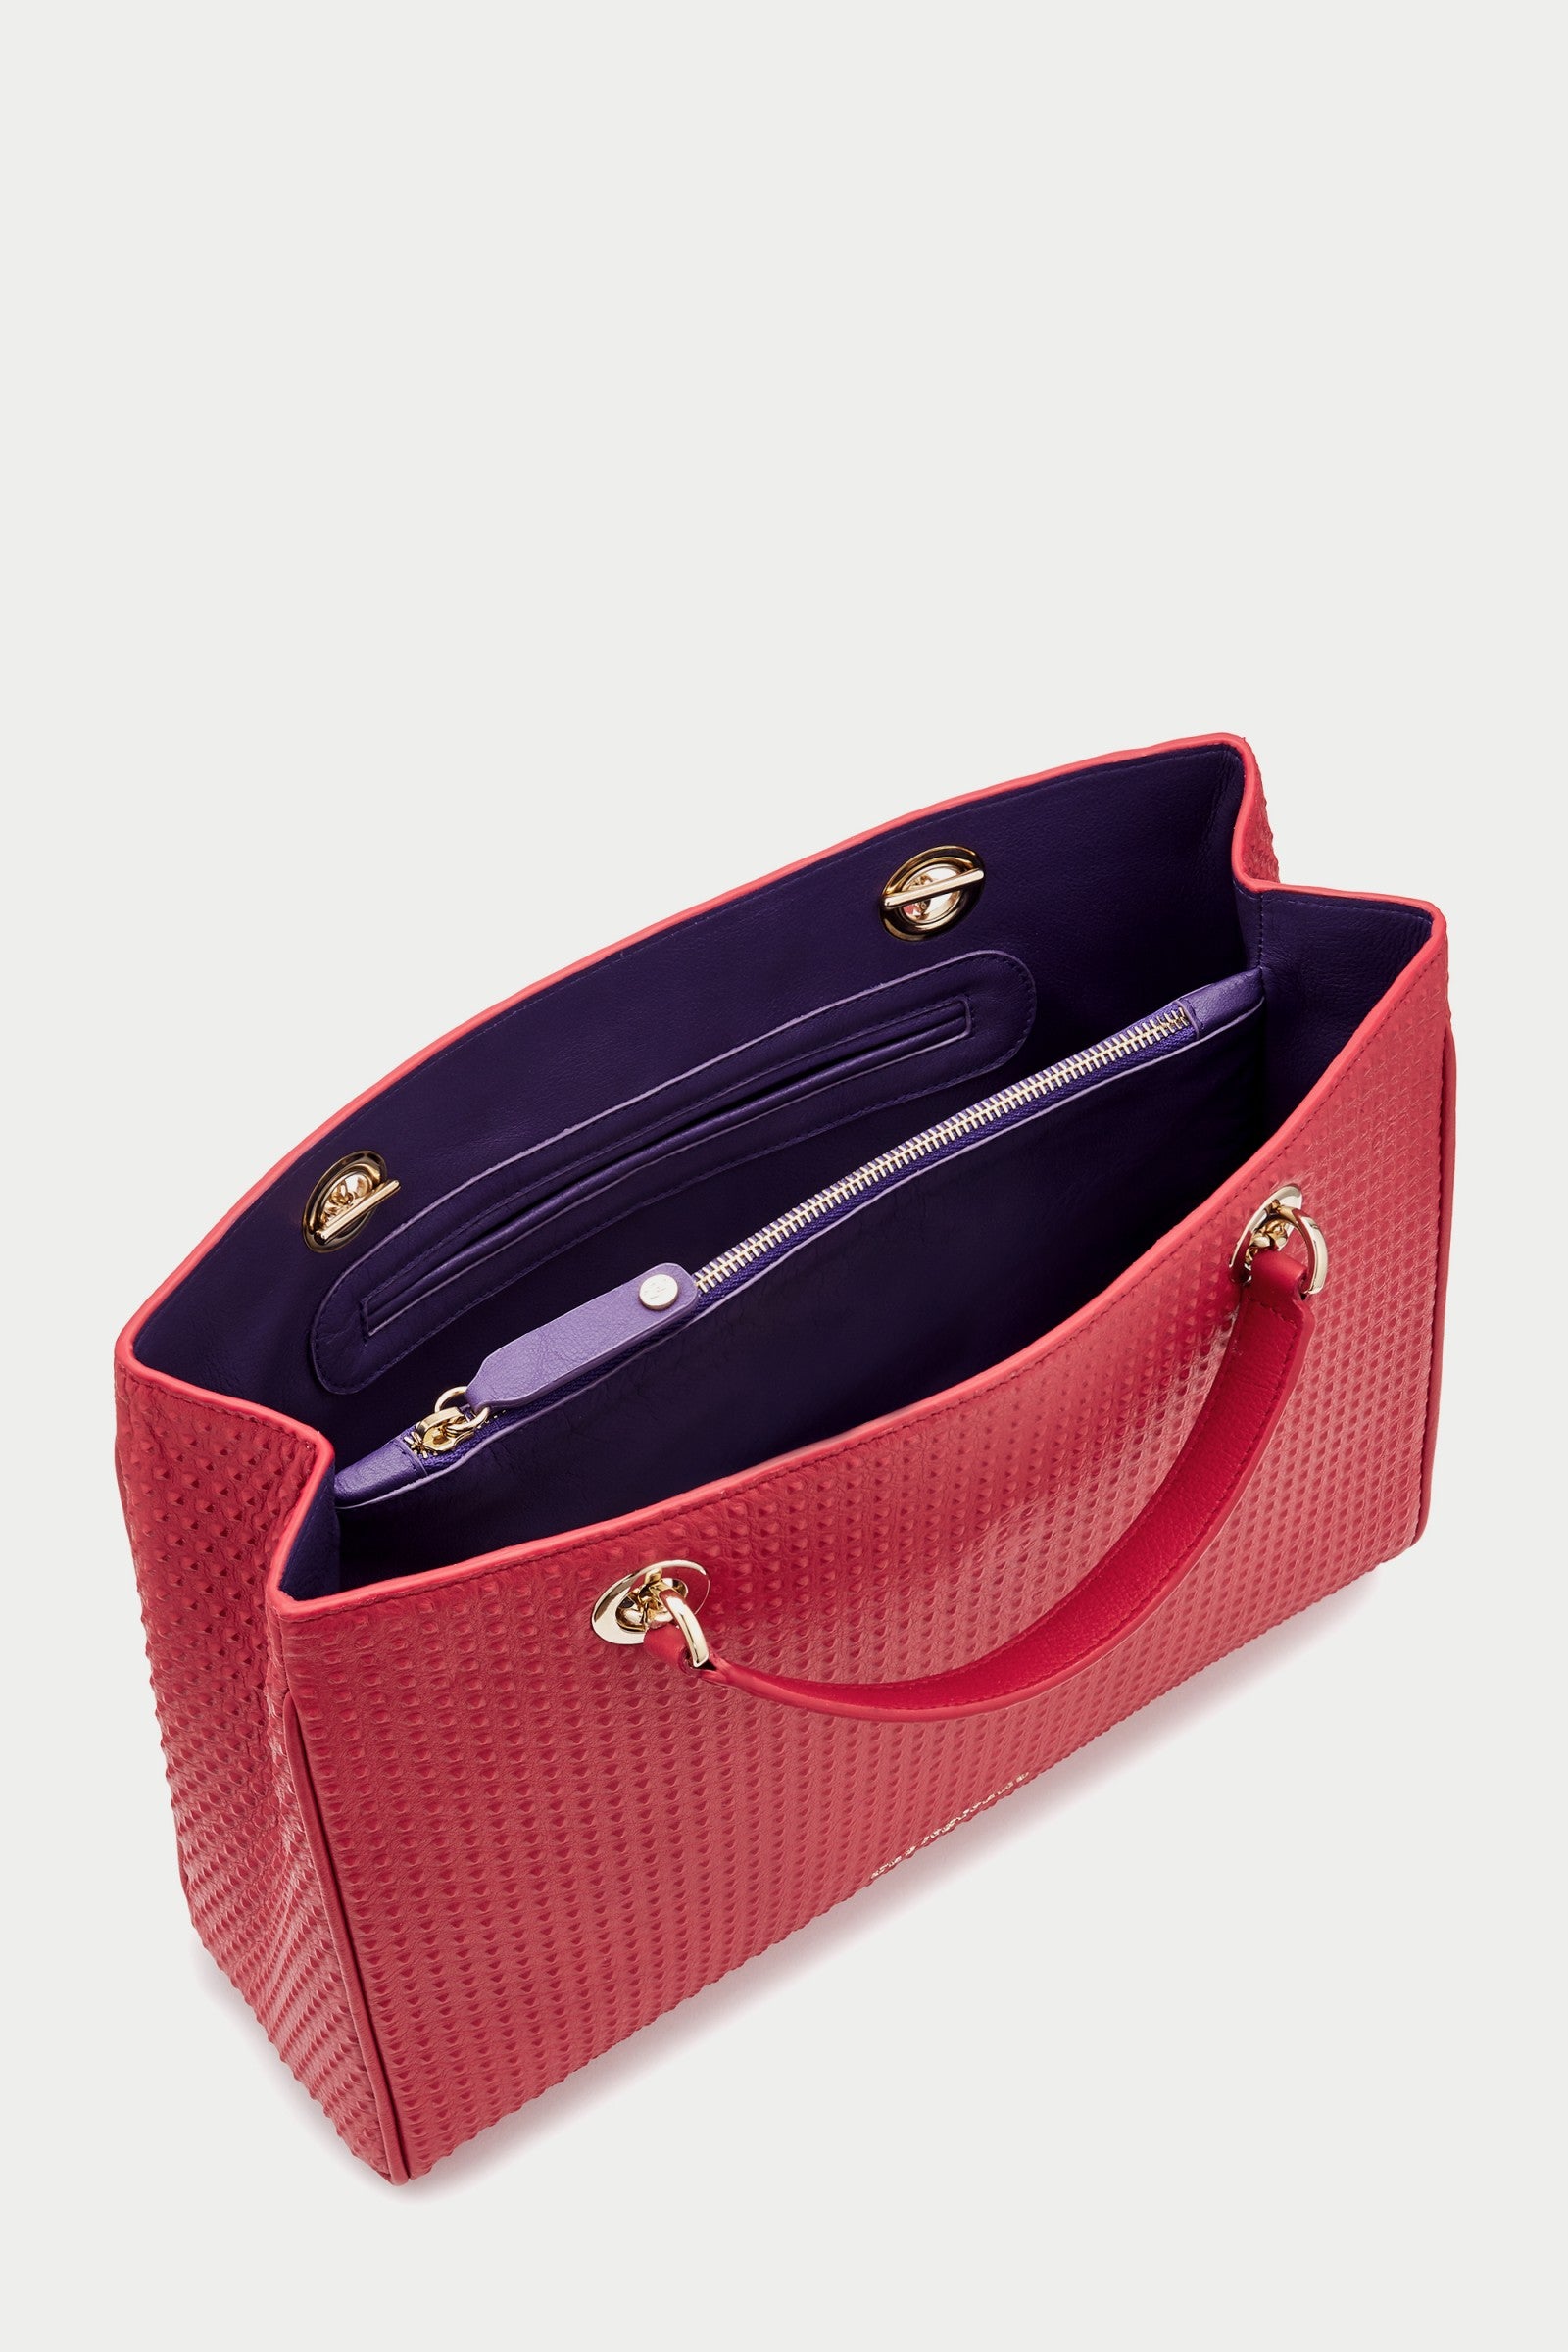 Francine BOSS PRINT LIPSTICK Red Leather Handbag